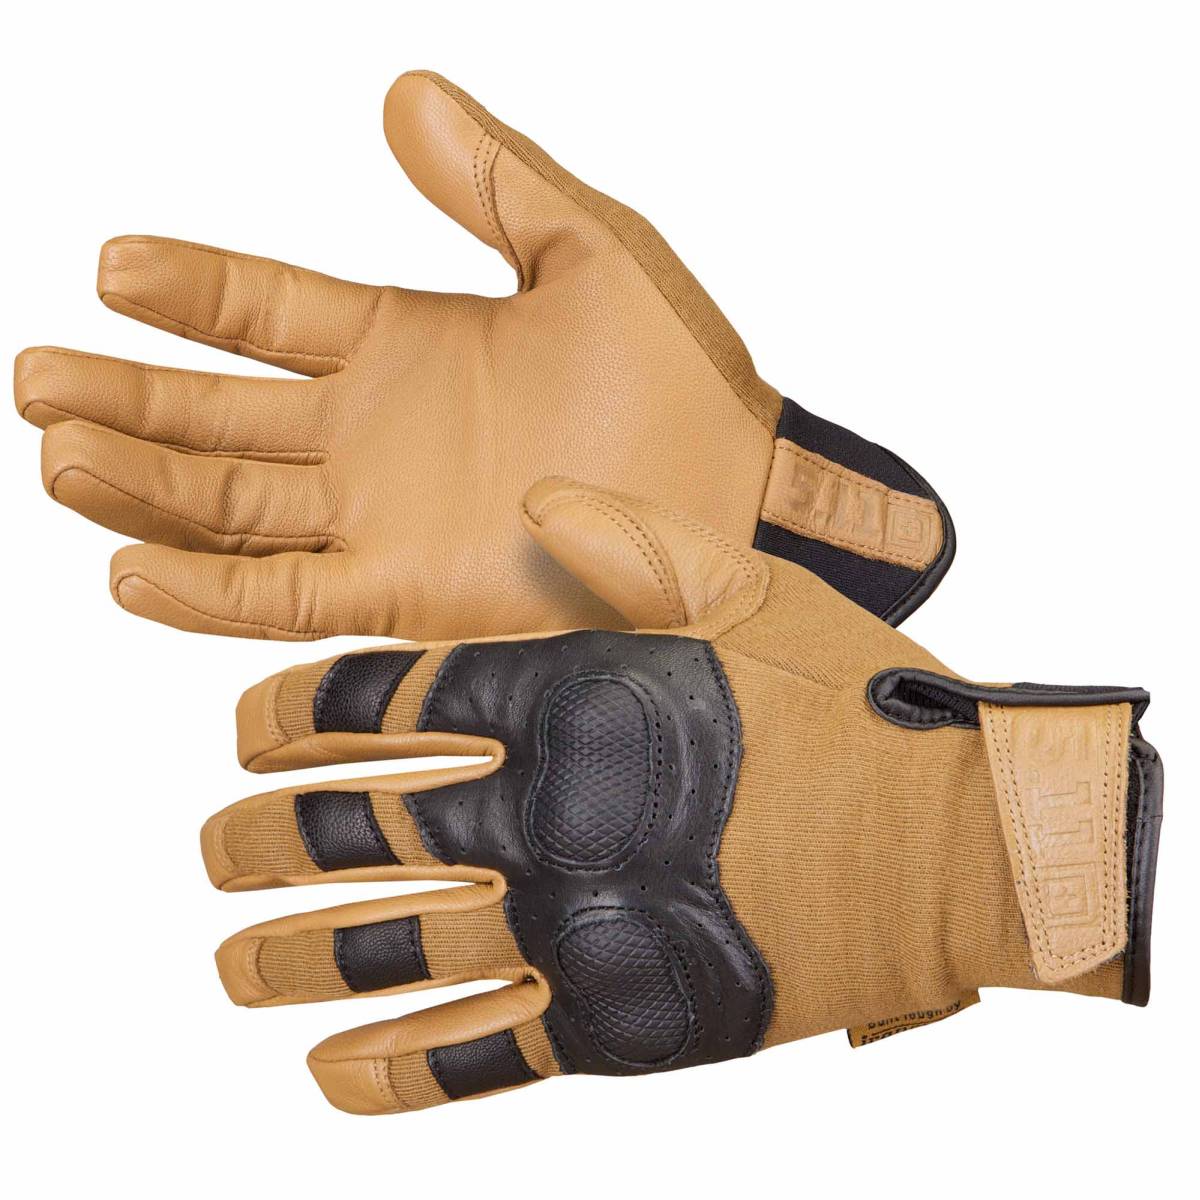 Gloves for Law Enforcement Professionals